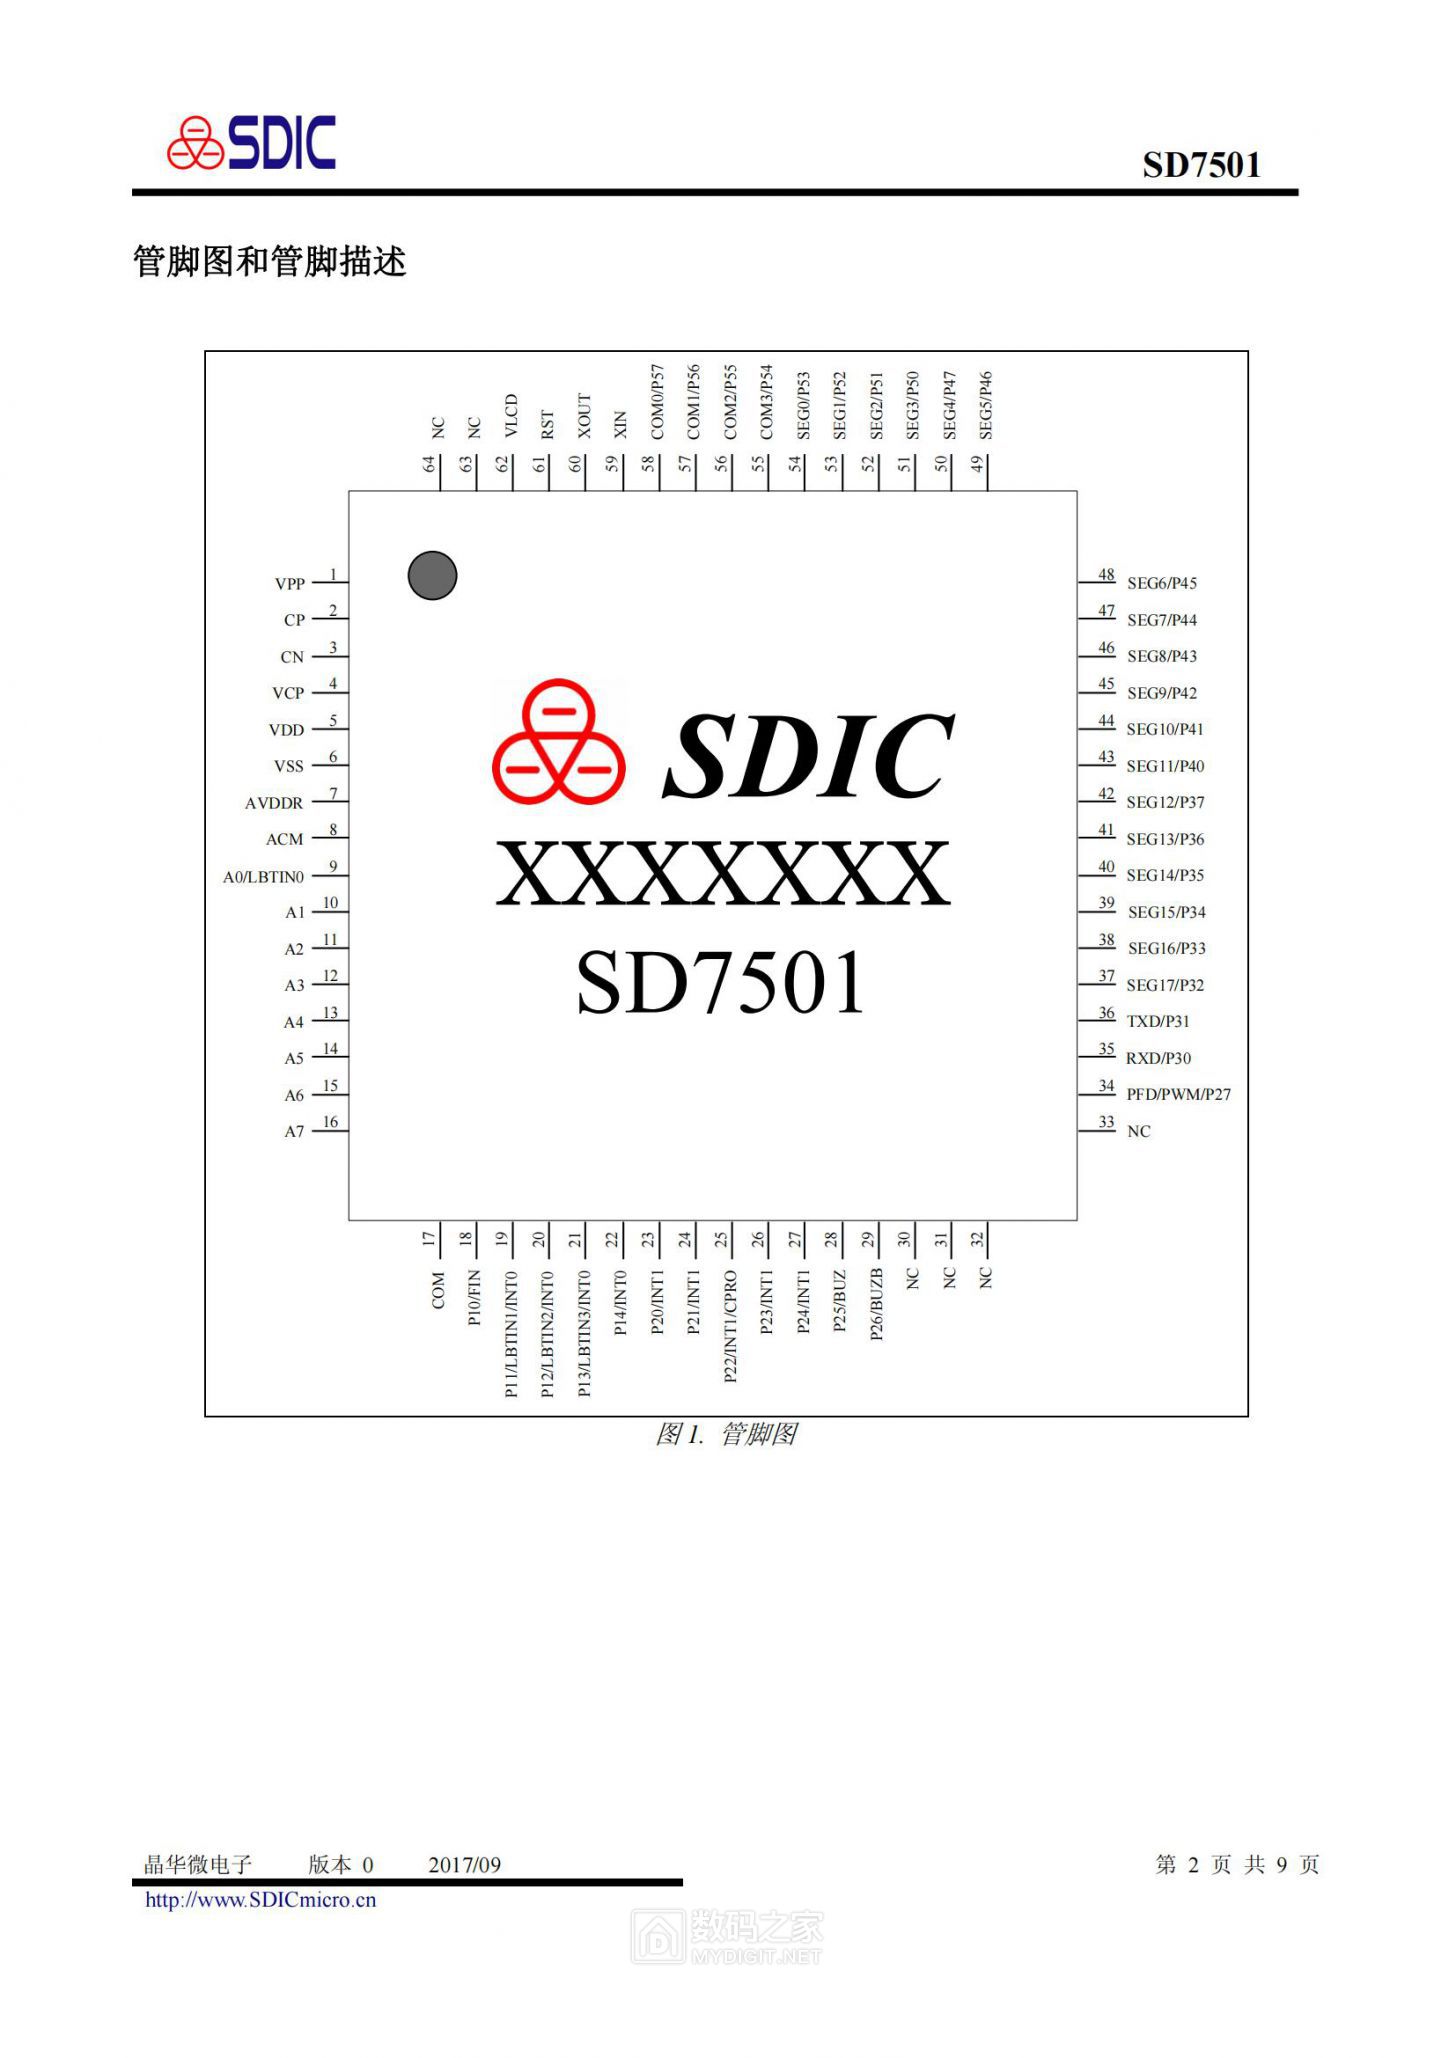 SD7501 (2).jpg